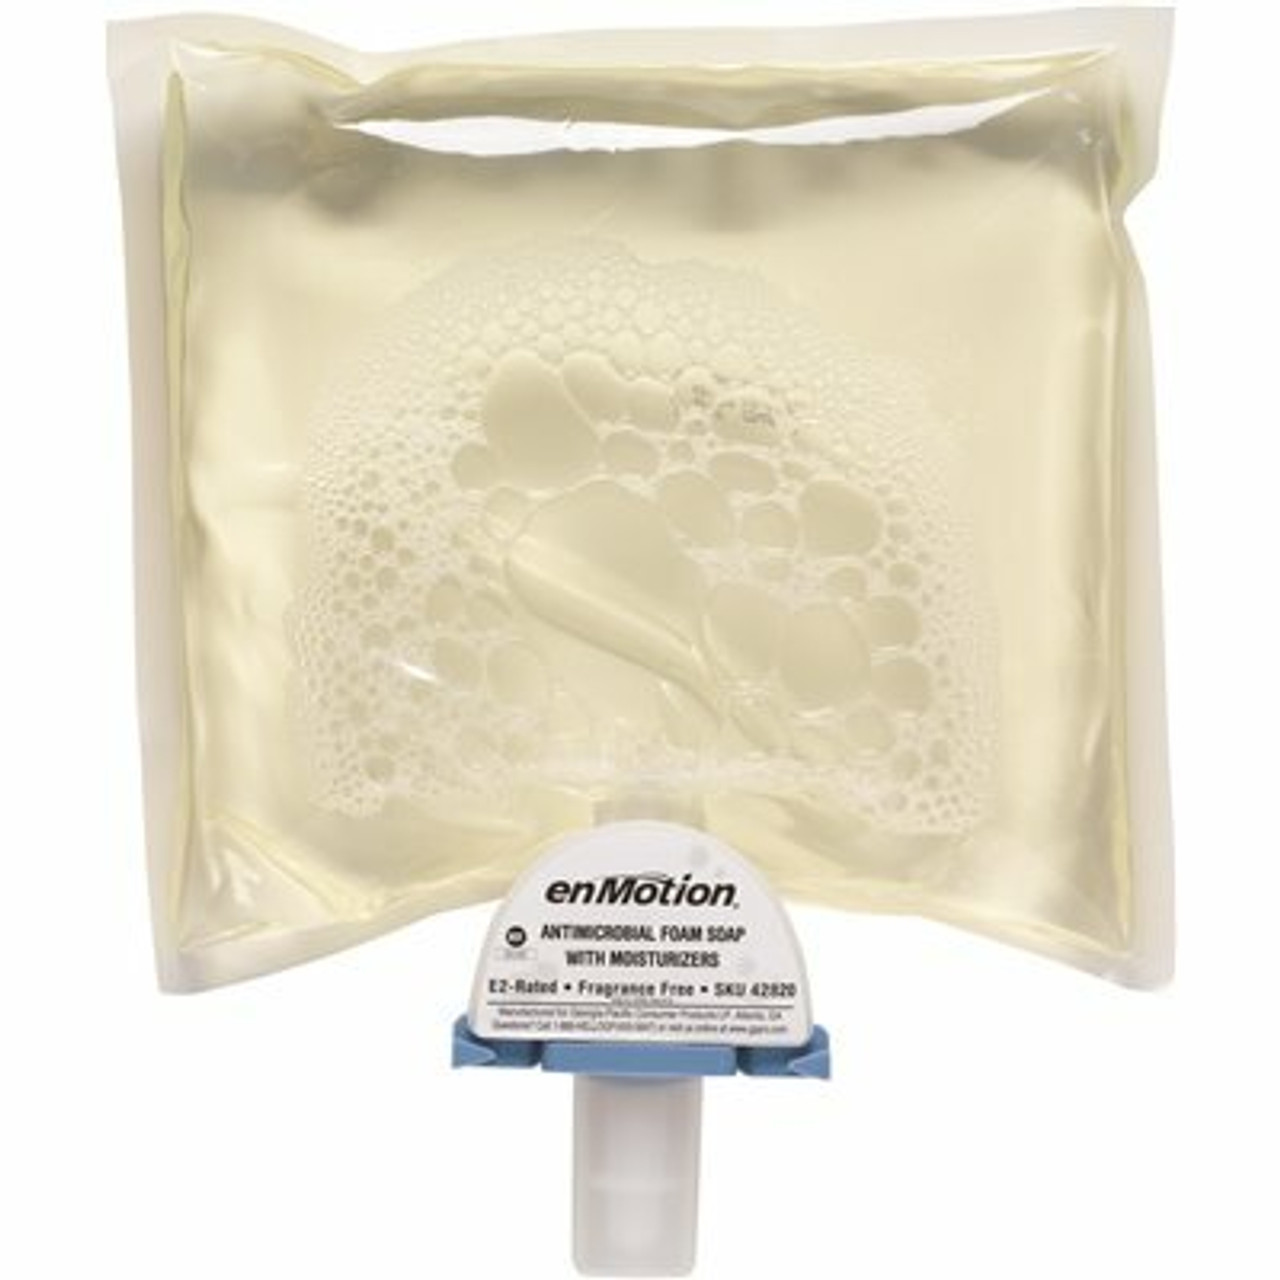 Enmotion Moisturizing Bzk Antimicrobial Foam Soap Dispenser Refill Dye And Fragrance Free (2 Bags Per Case)